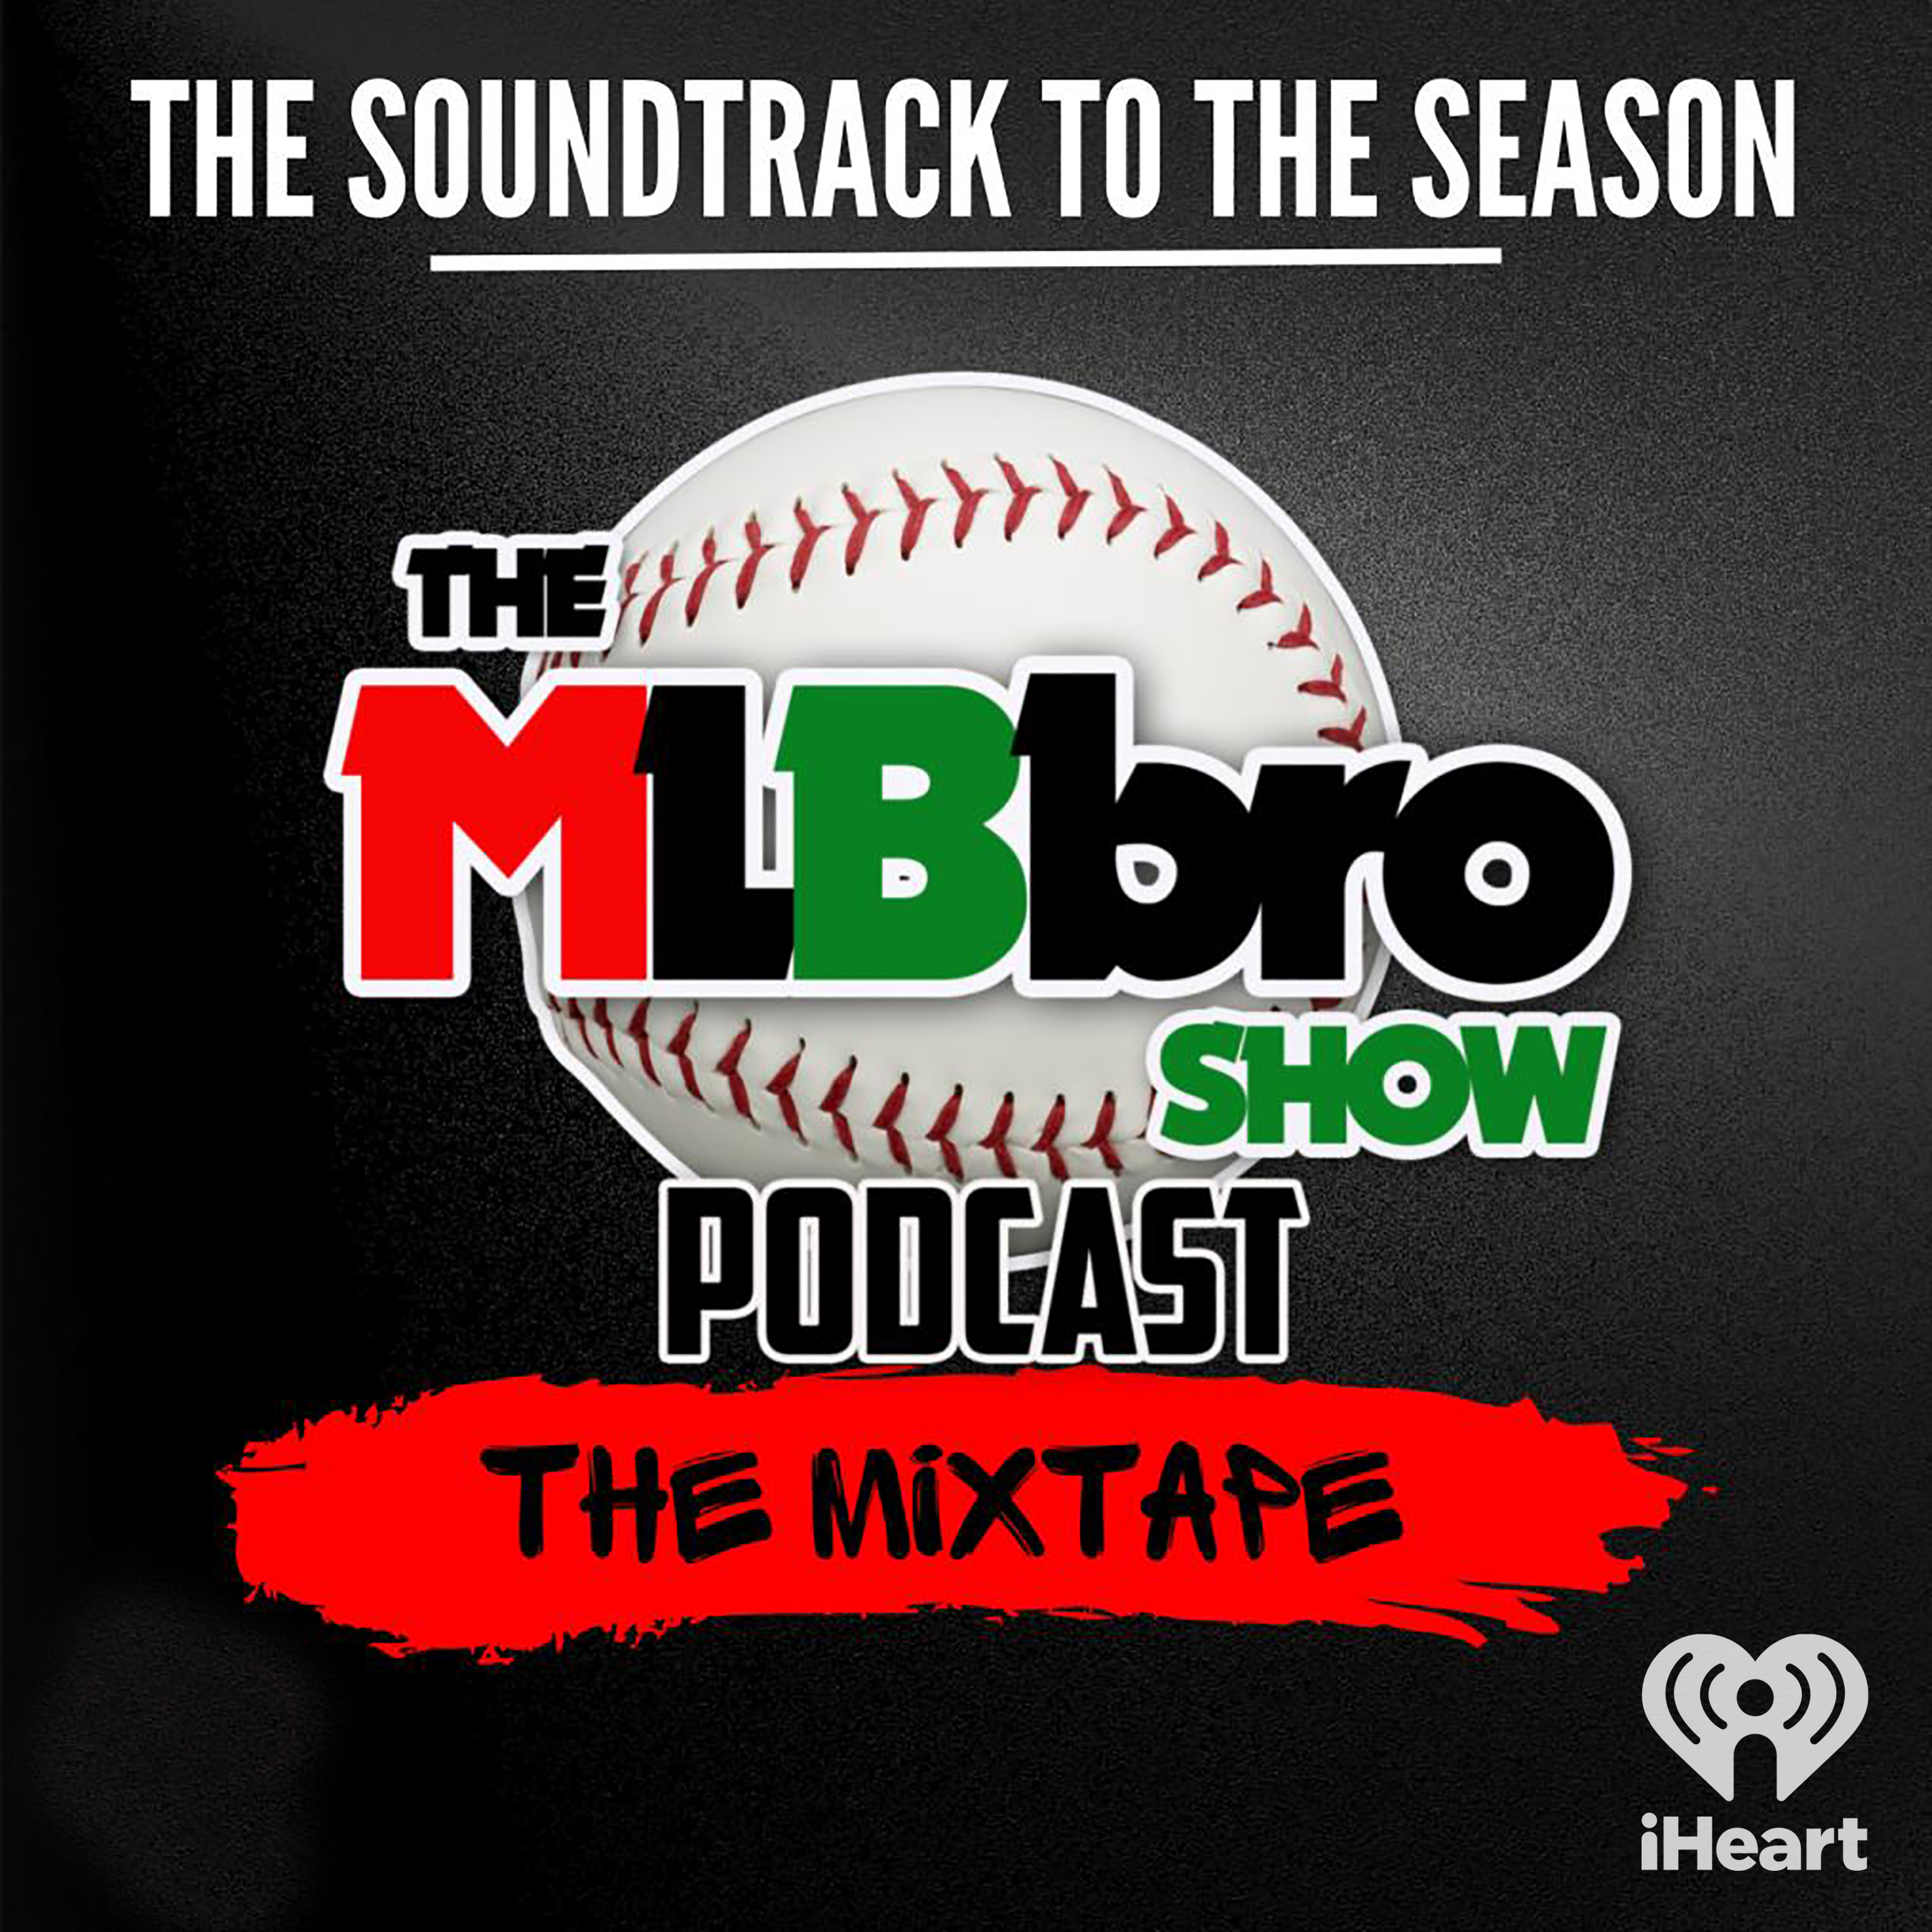 MLBbro Show Podcast The Mixtape Vol 4 Episode 5